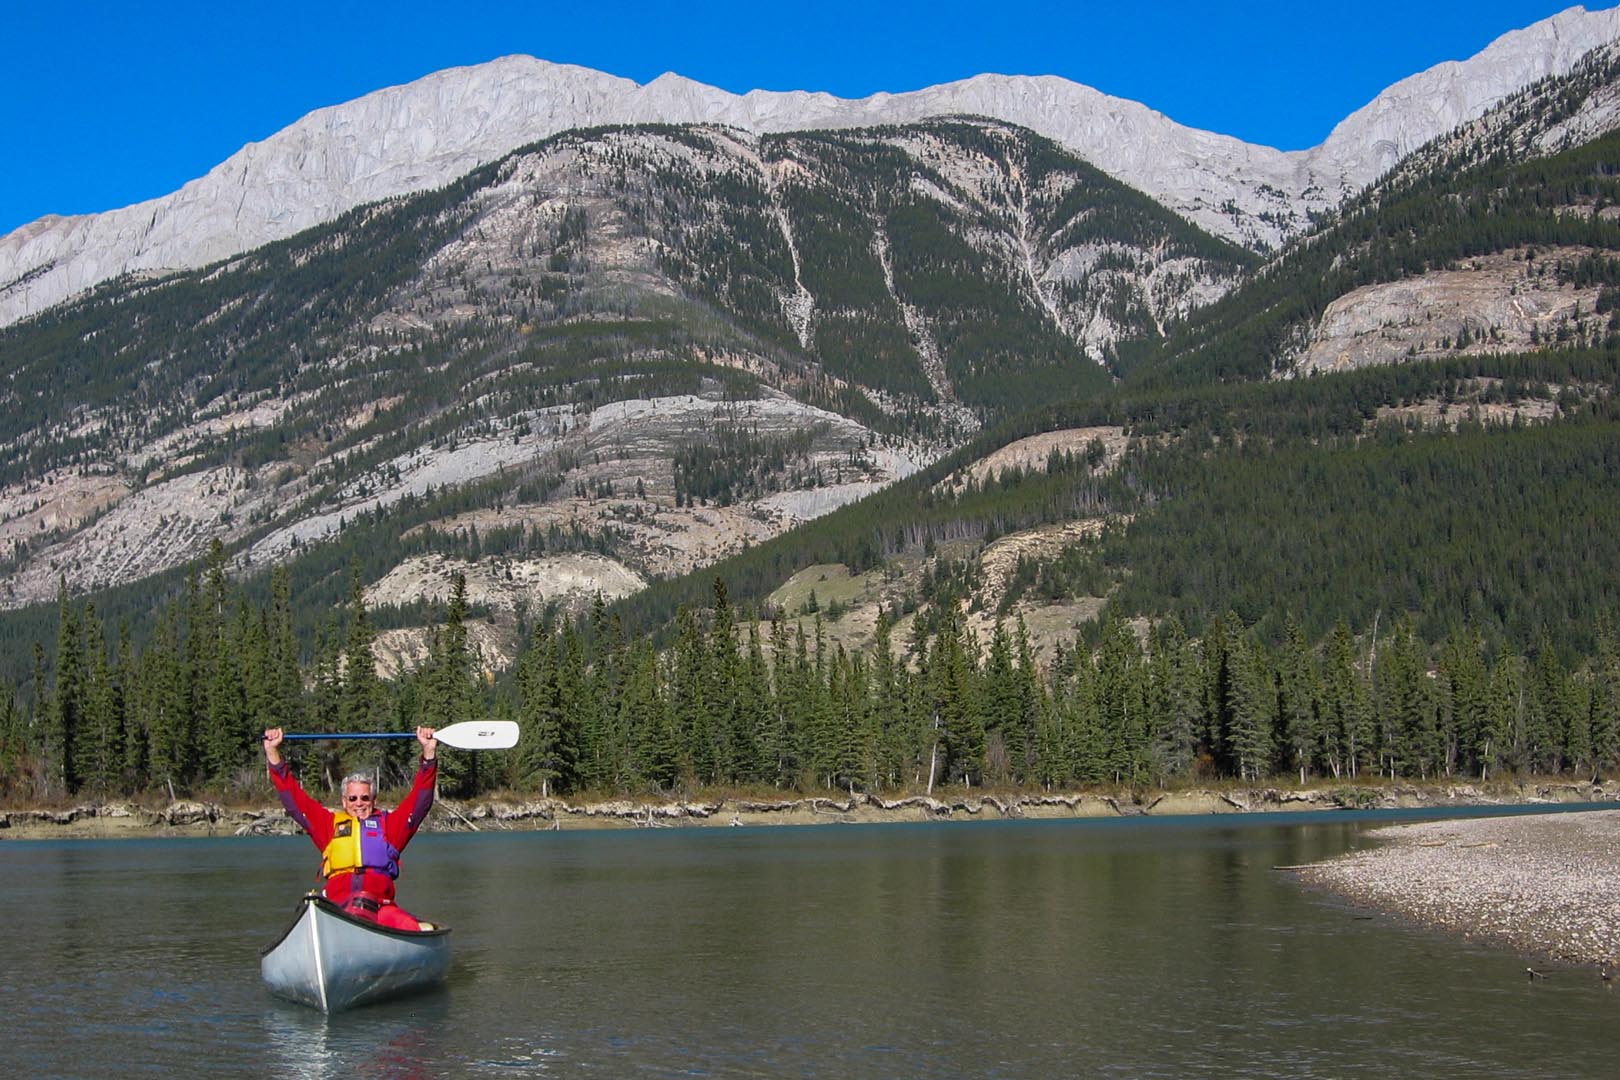 Canoeing Athabsca River - Explore Jasper